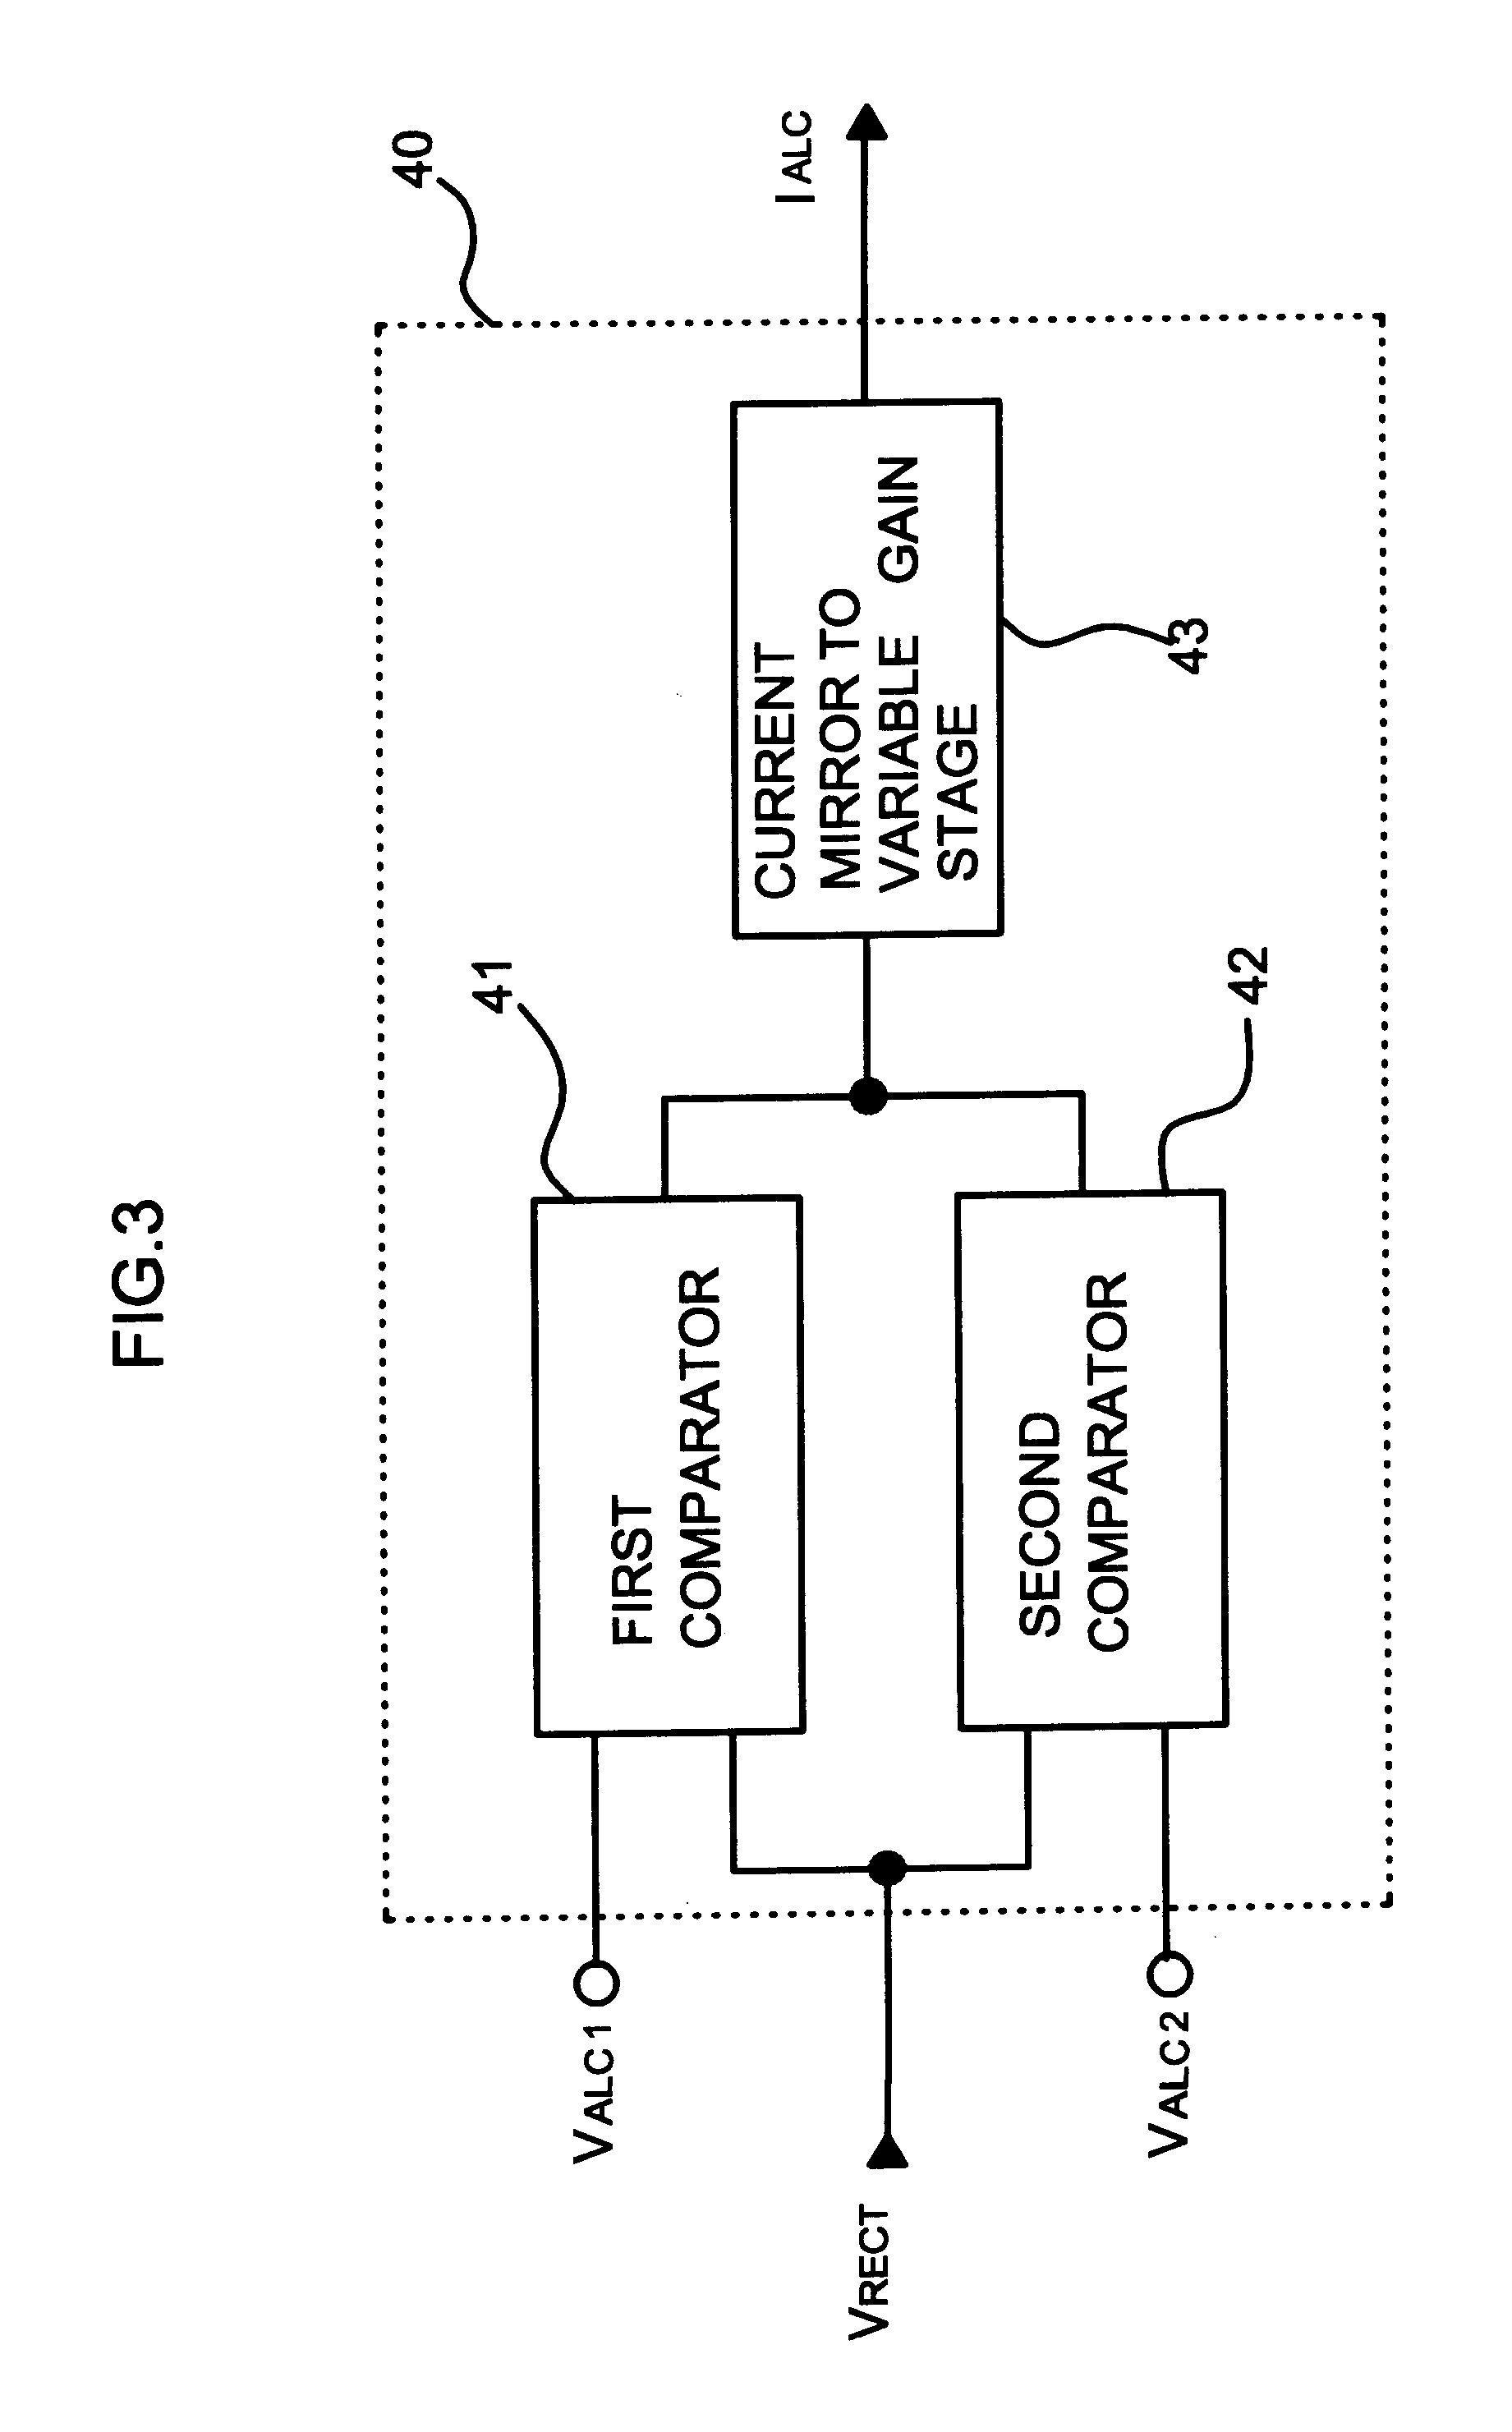 Signal compressing circuit